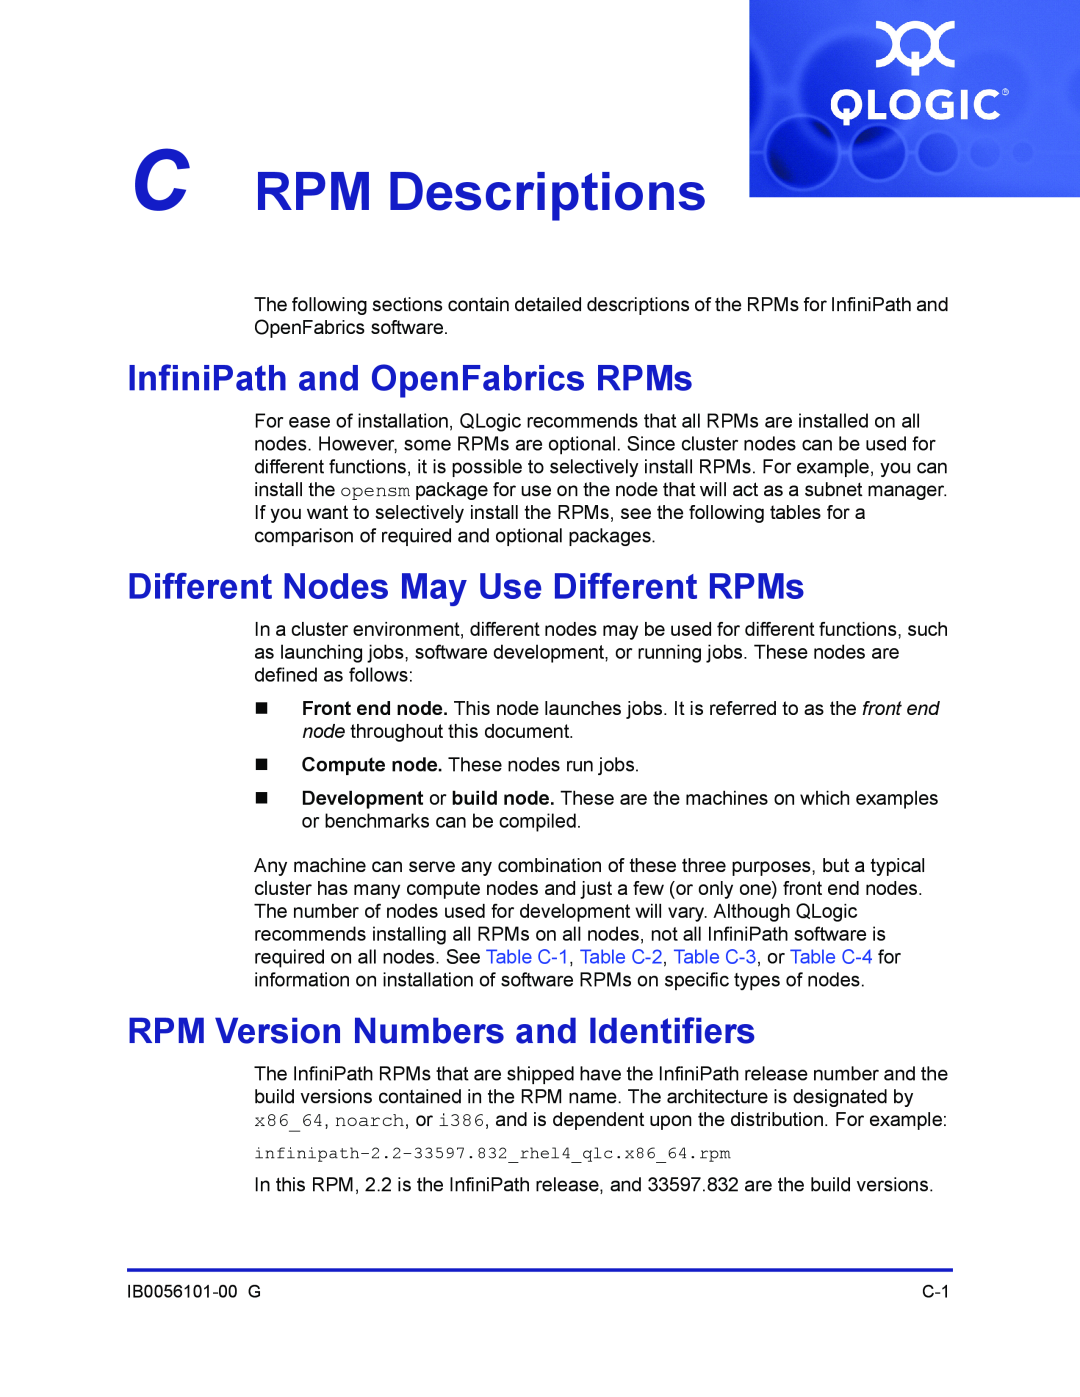 Q-Logic IB0056101-00 G manual C RPM Descriptions, InfiniPath and OpenFabrics RPMs, Different Nodes May Use Different RPMs 